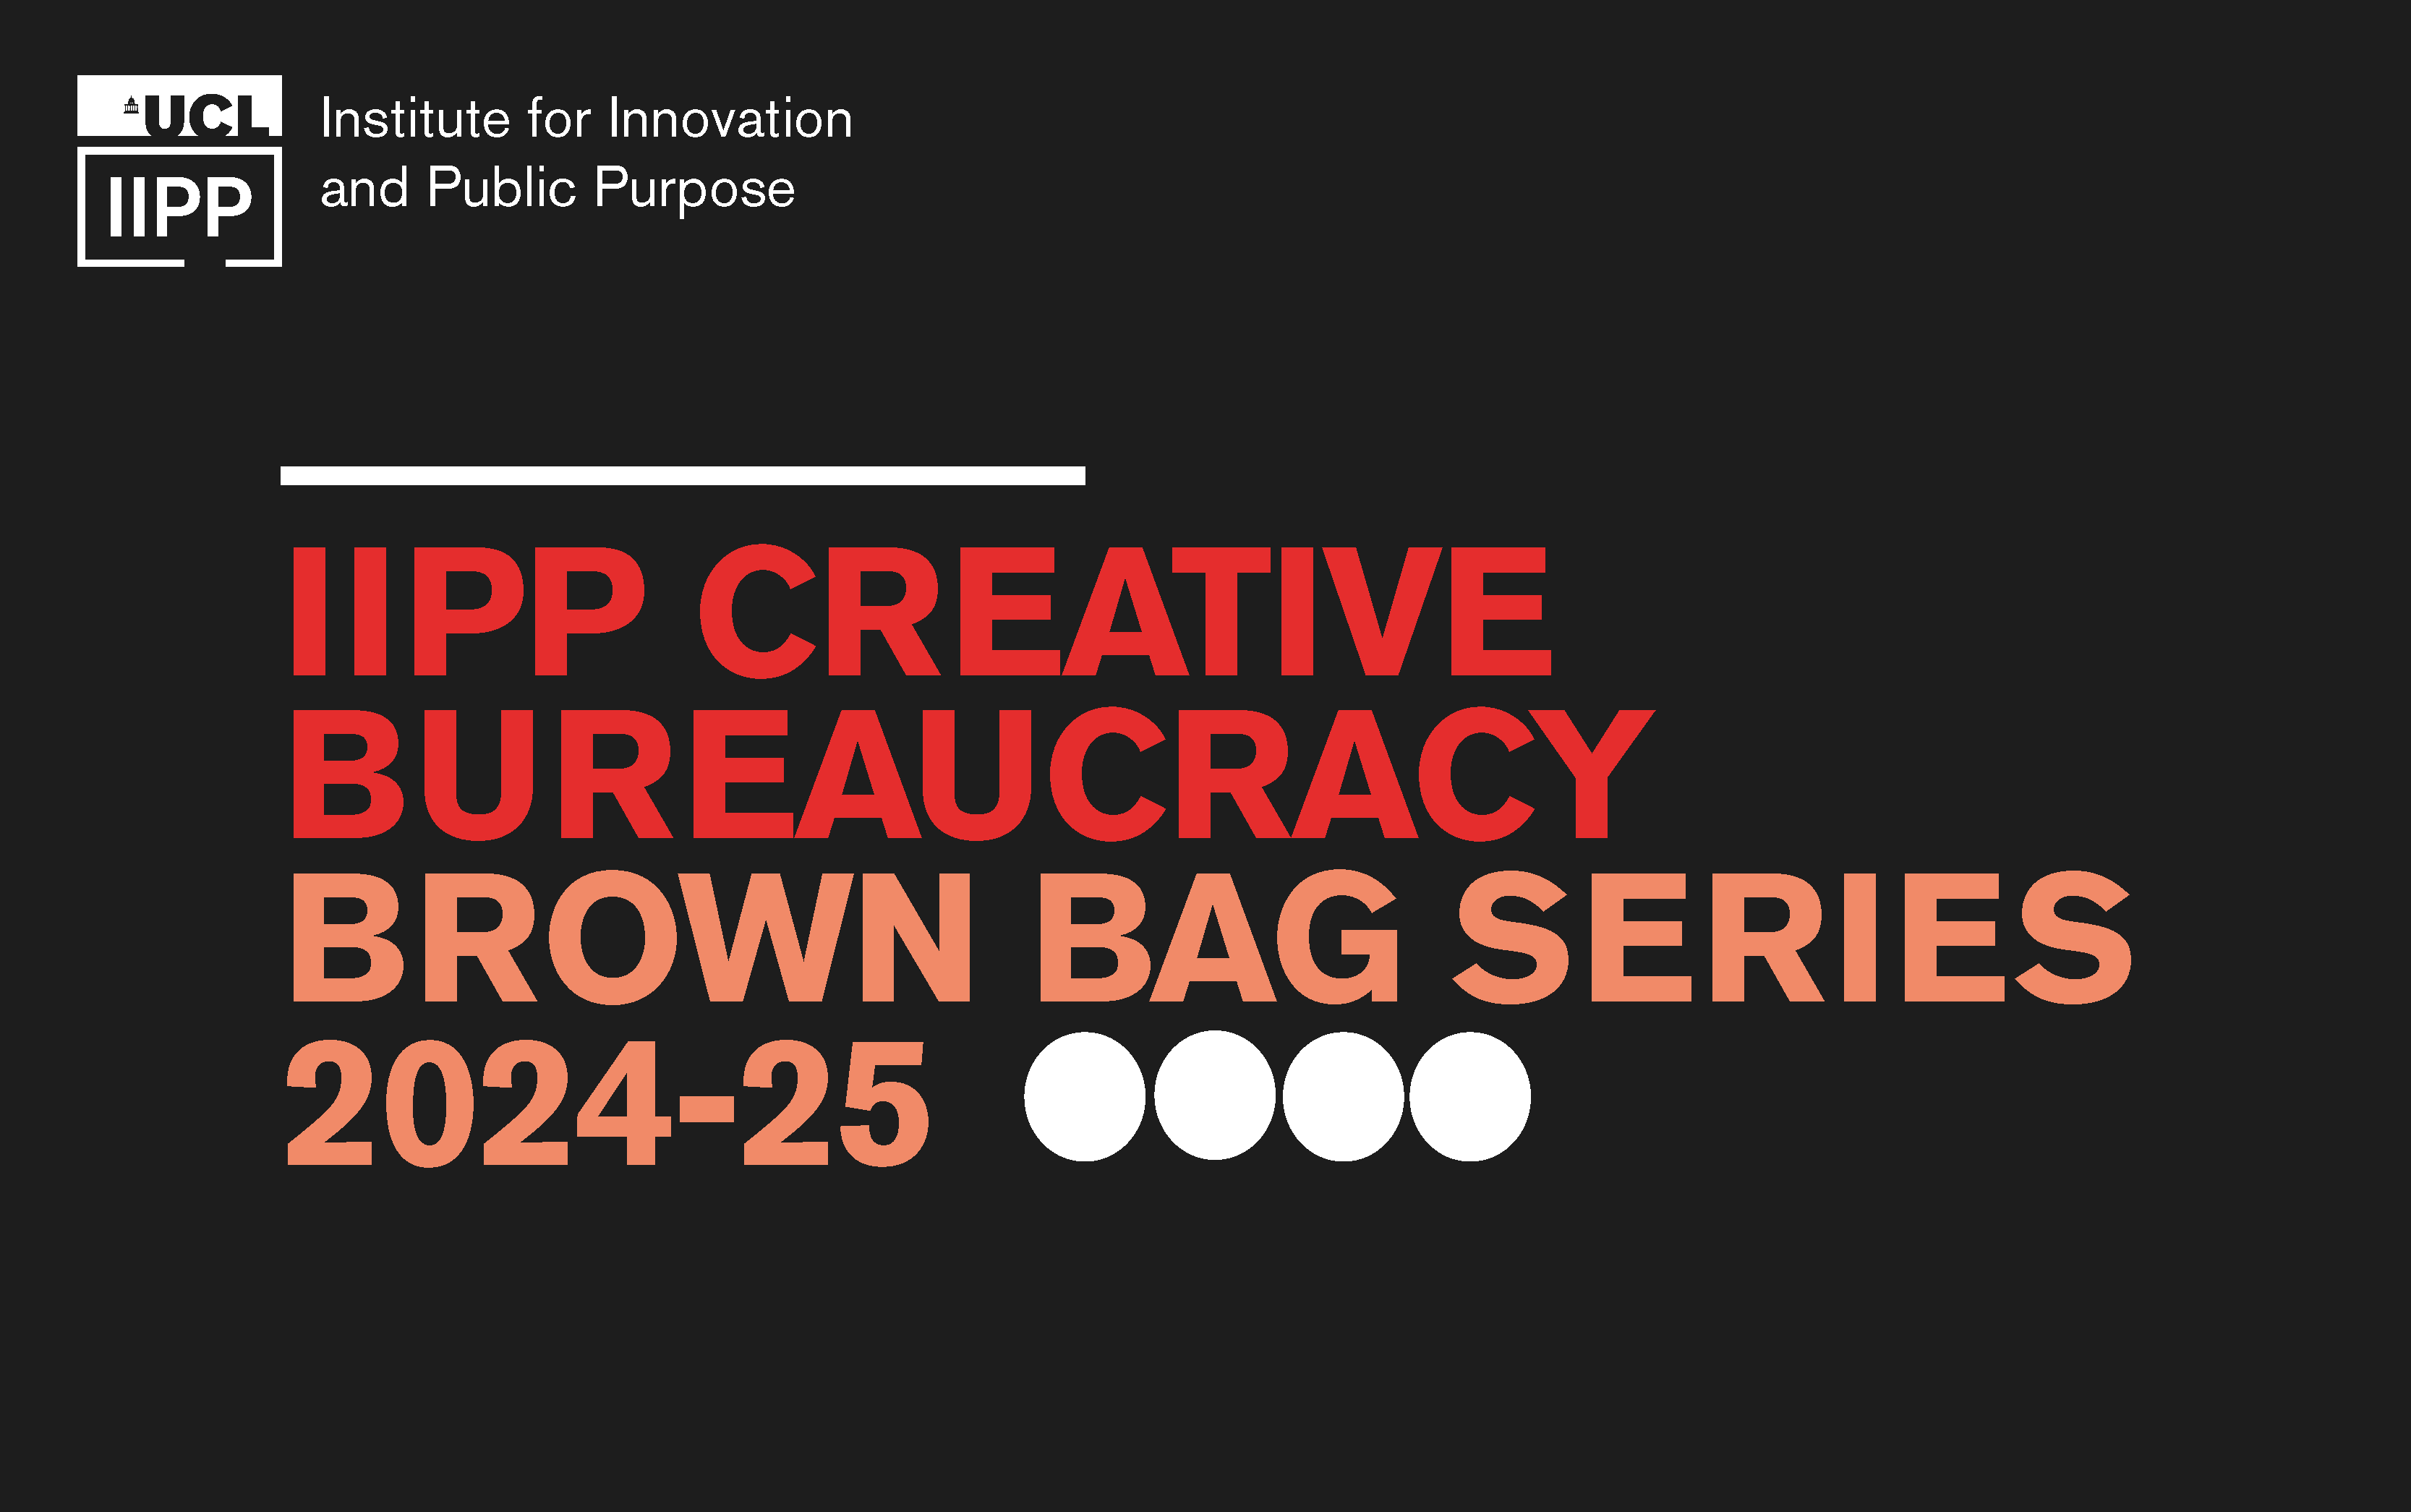 Creative Bureaucracy brown bag events